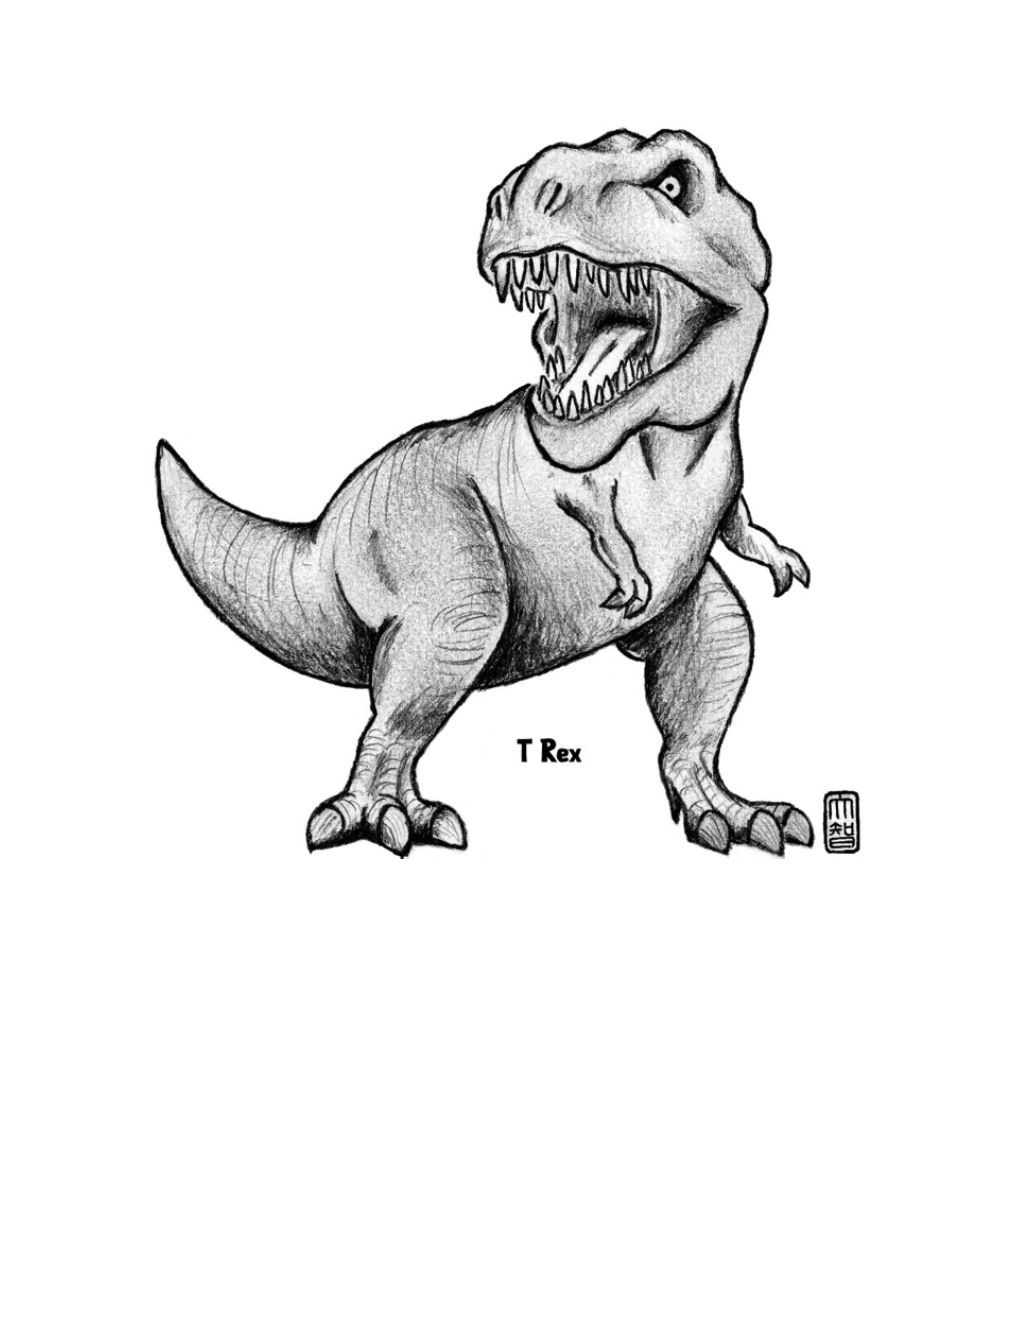 Tyrannosaurus Rex: Predator, Scavenger Or Neither?